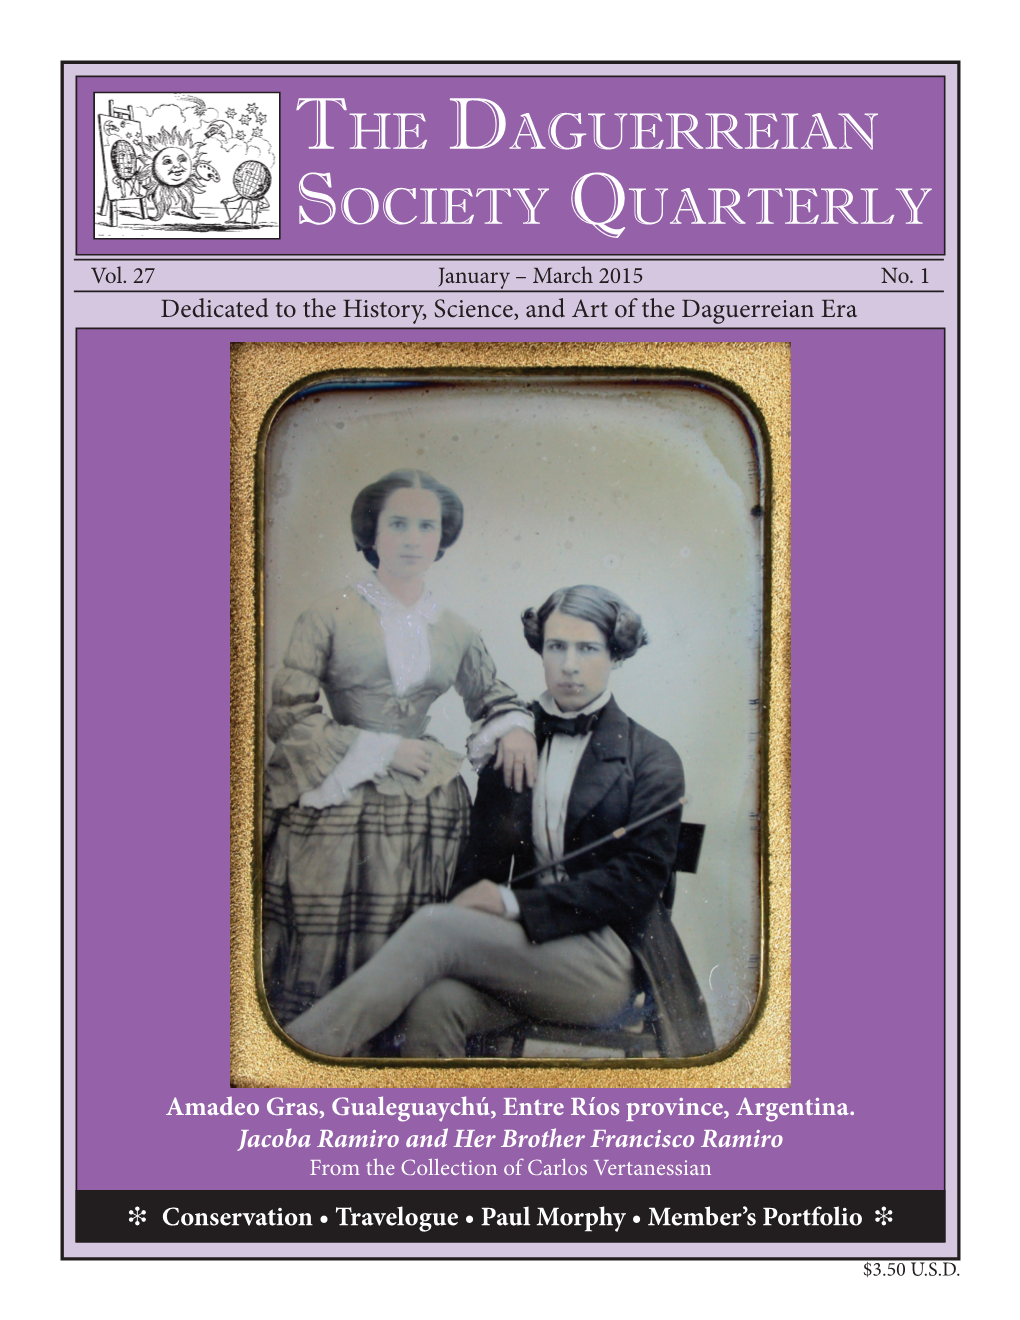 The Daguerreian Society Quarterly